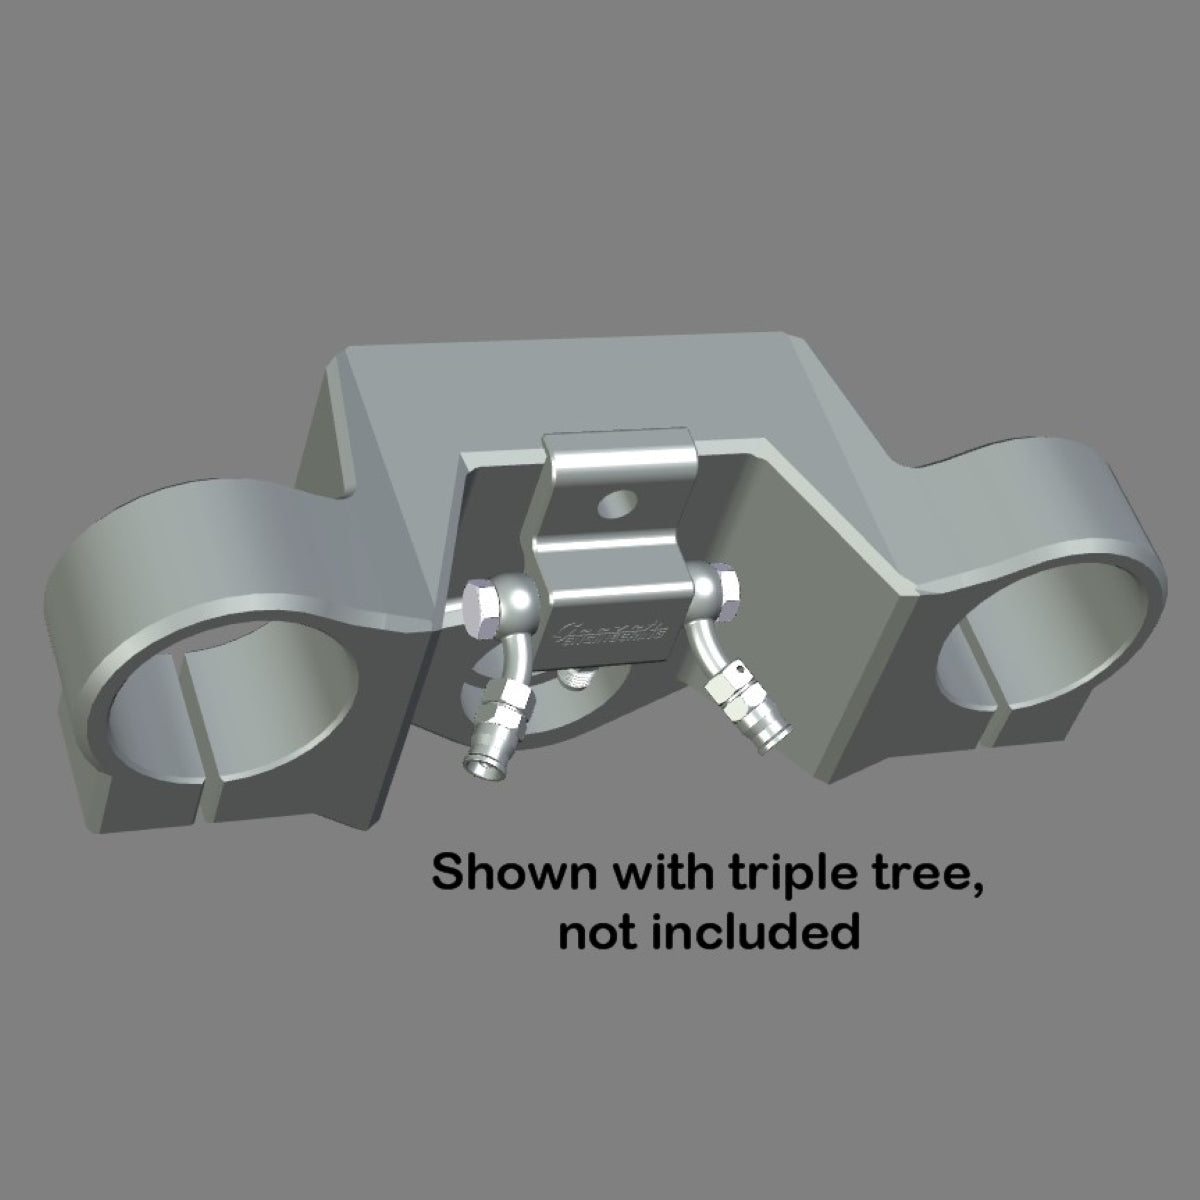 New! Brake line kit for GeezerEngineering Dyna/FXR/Sportster drop triple trees!